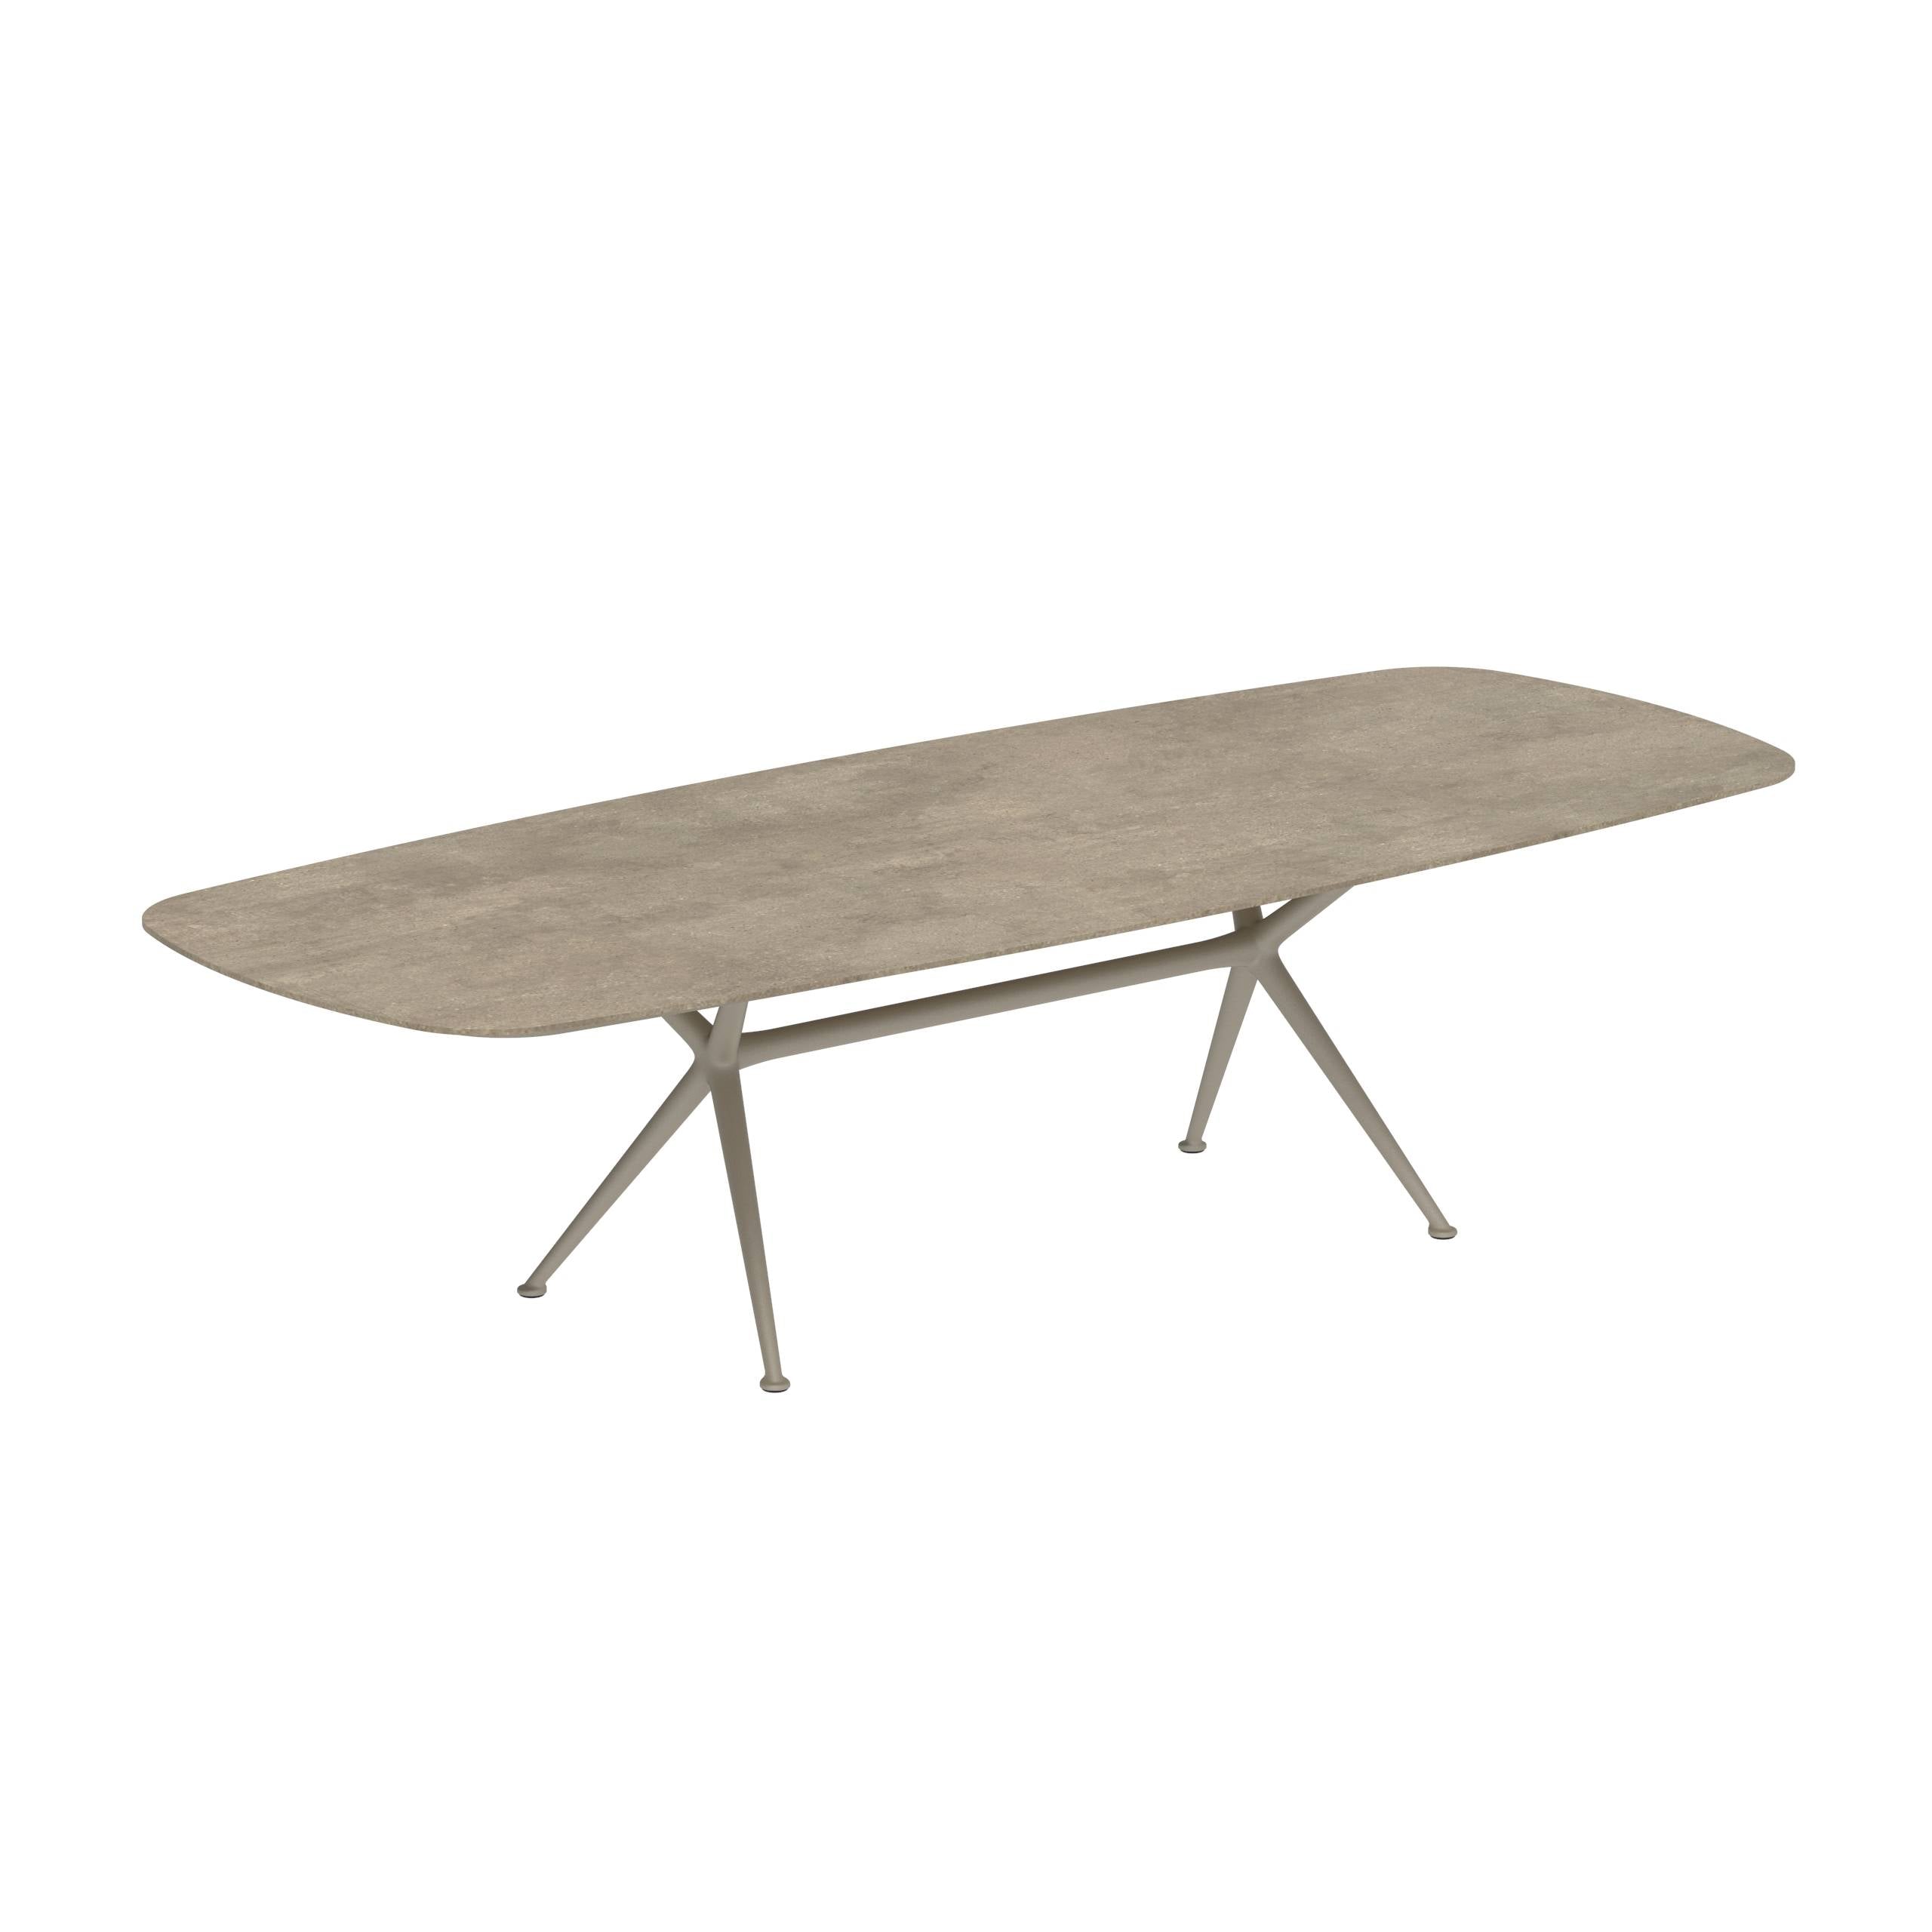 Exes Table 300x120cm Alu Legs Sand - Table Top Ceramic Terra Sabbia